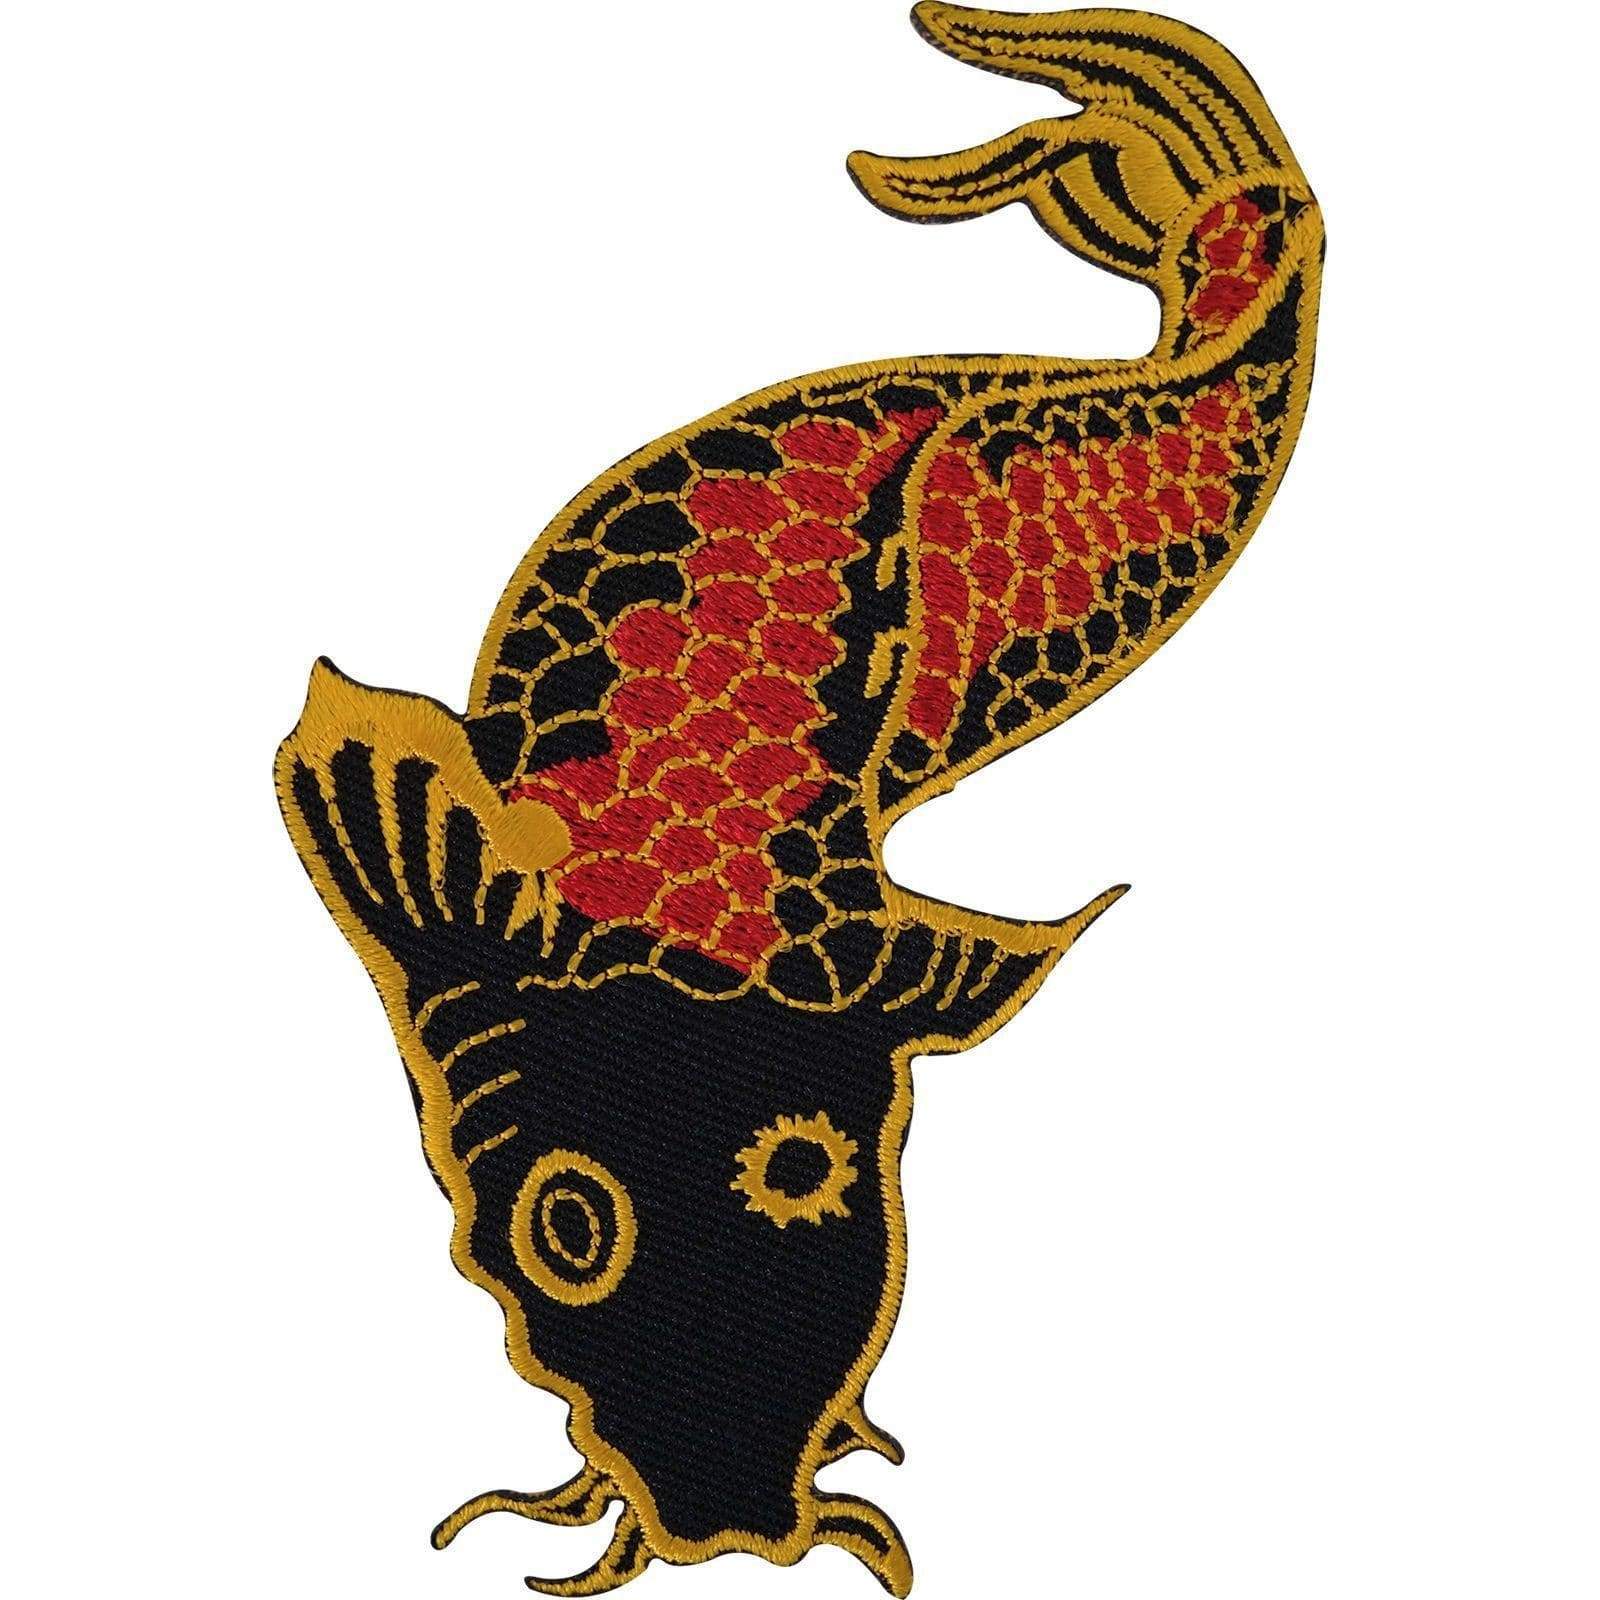 Japanese Koi Carp Fish Embroidered Iron / Sew On Patch Motorcycle Jacket Badge